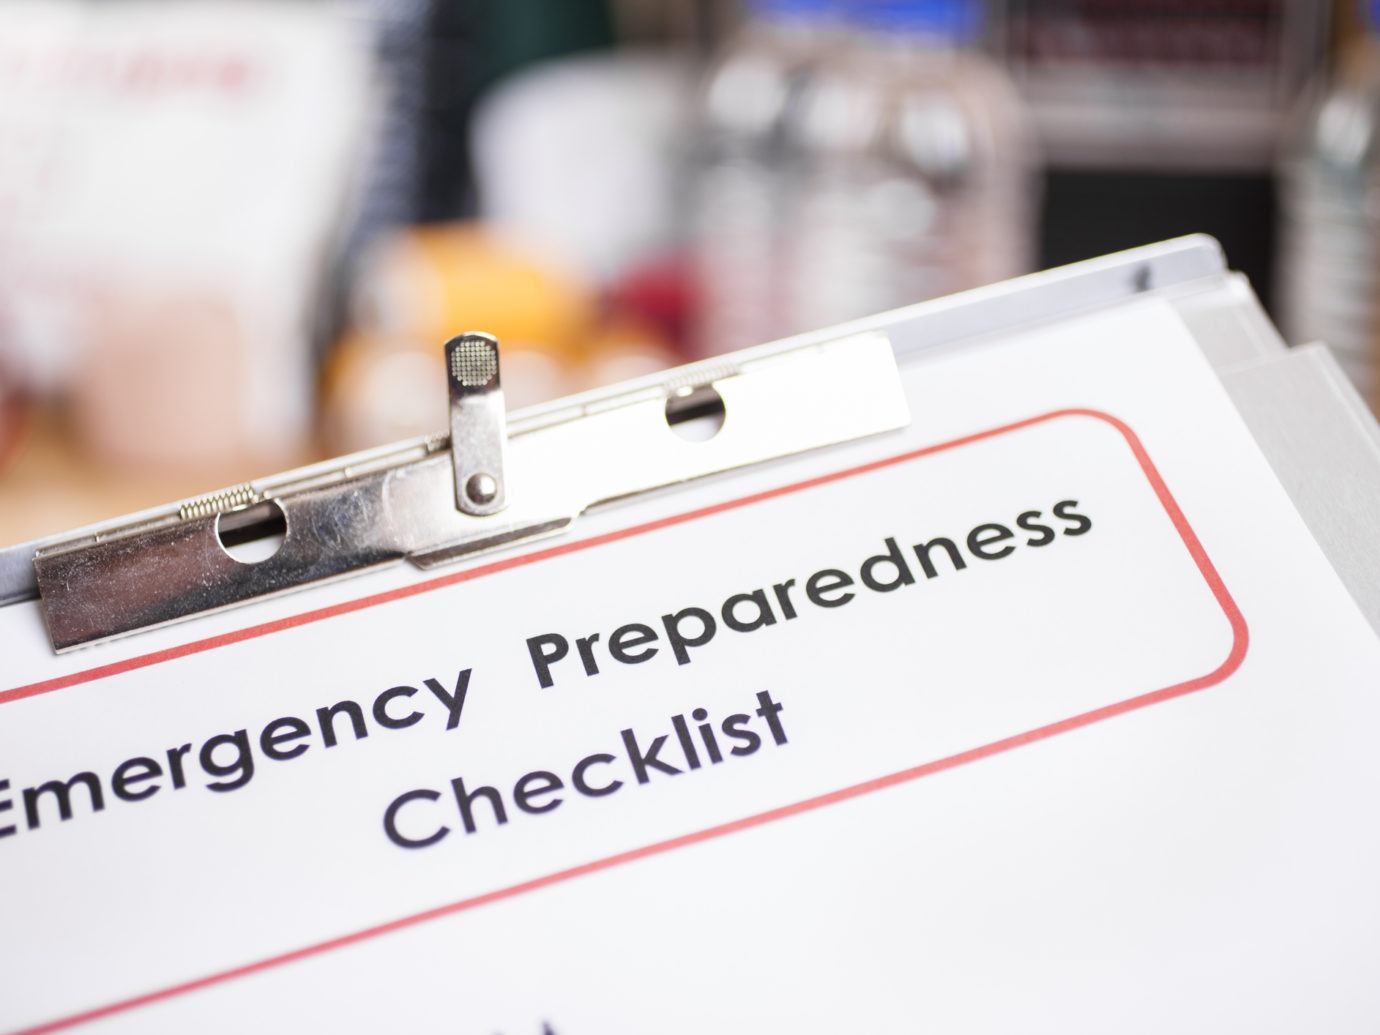 Emergency preparedness checklist and natural disaster supplies